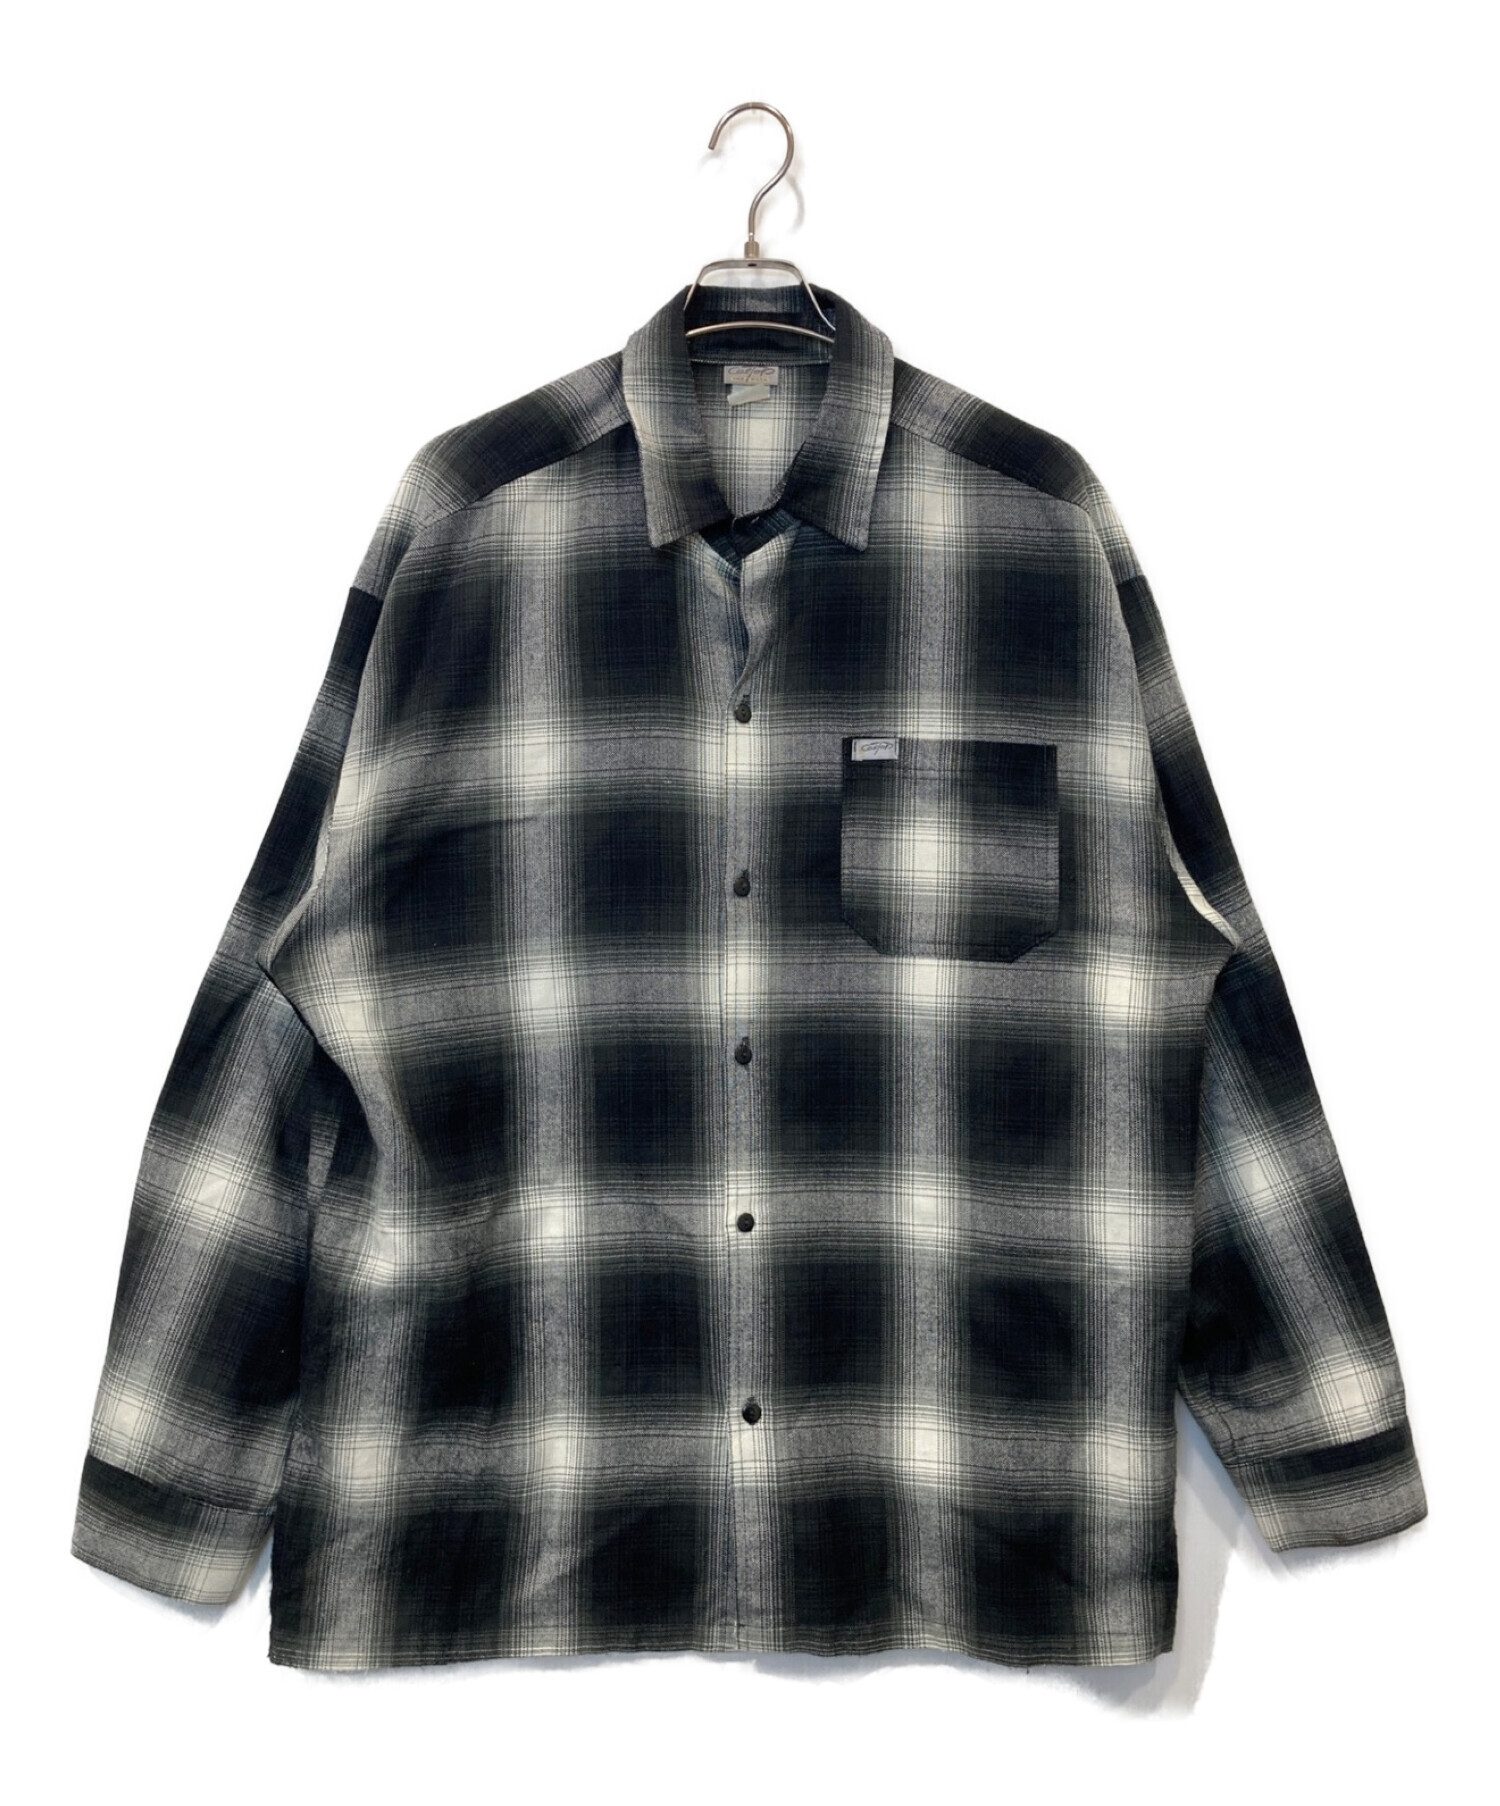 CalTop (キャルトップ) オンブレチェックシャツ ブラック×グレー サイズ:2XL